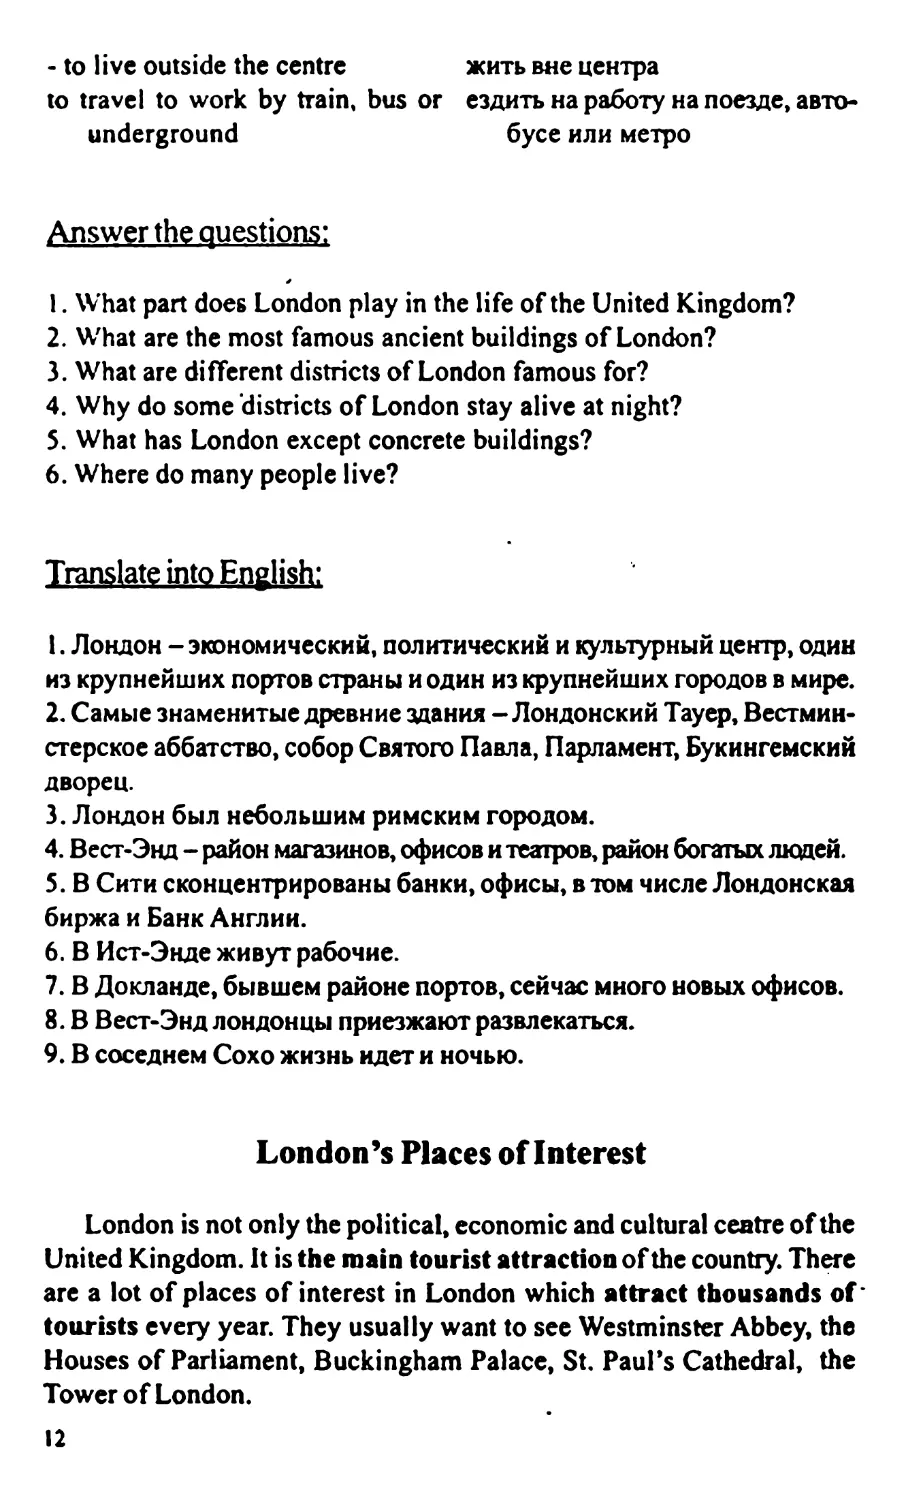 London’s Places of Interest